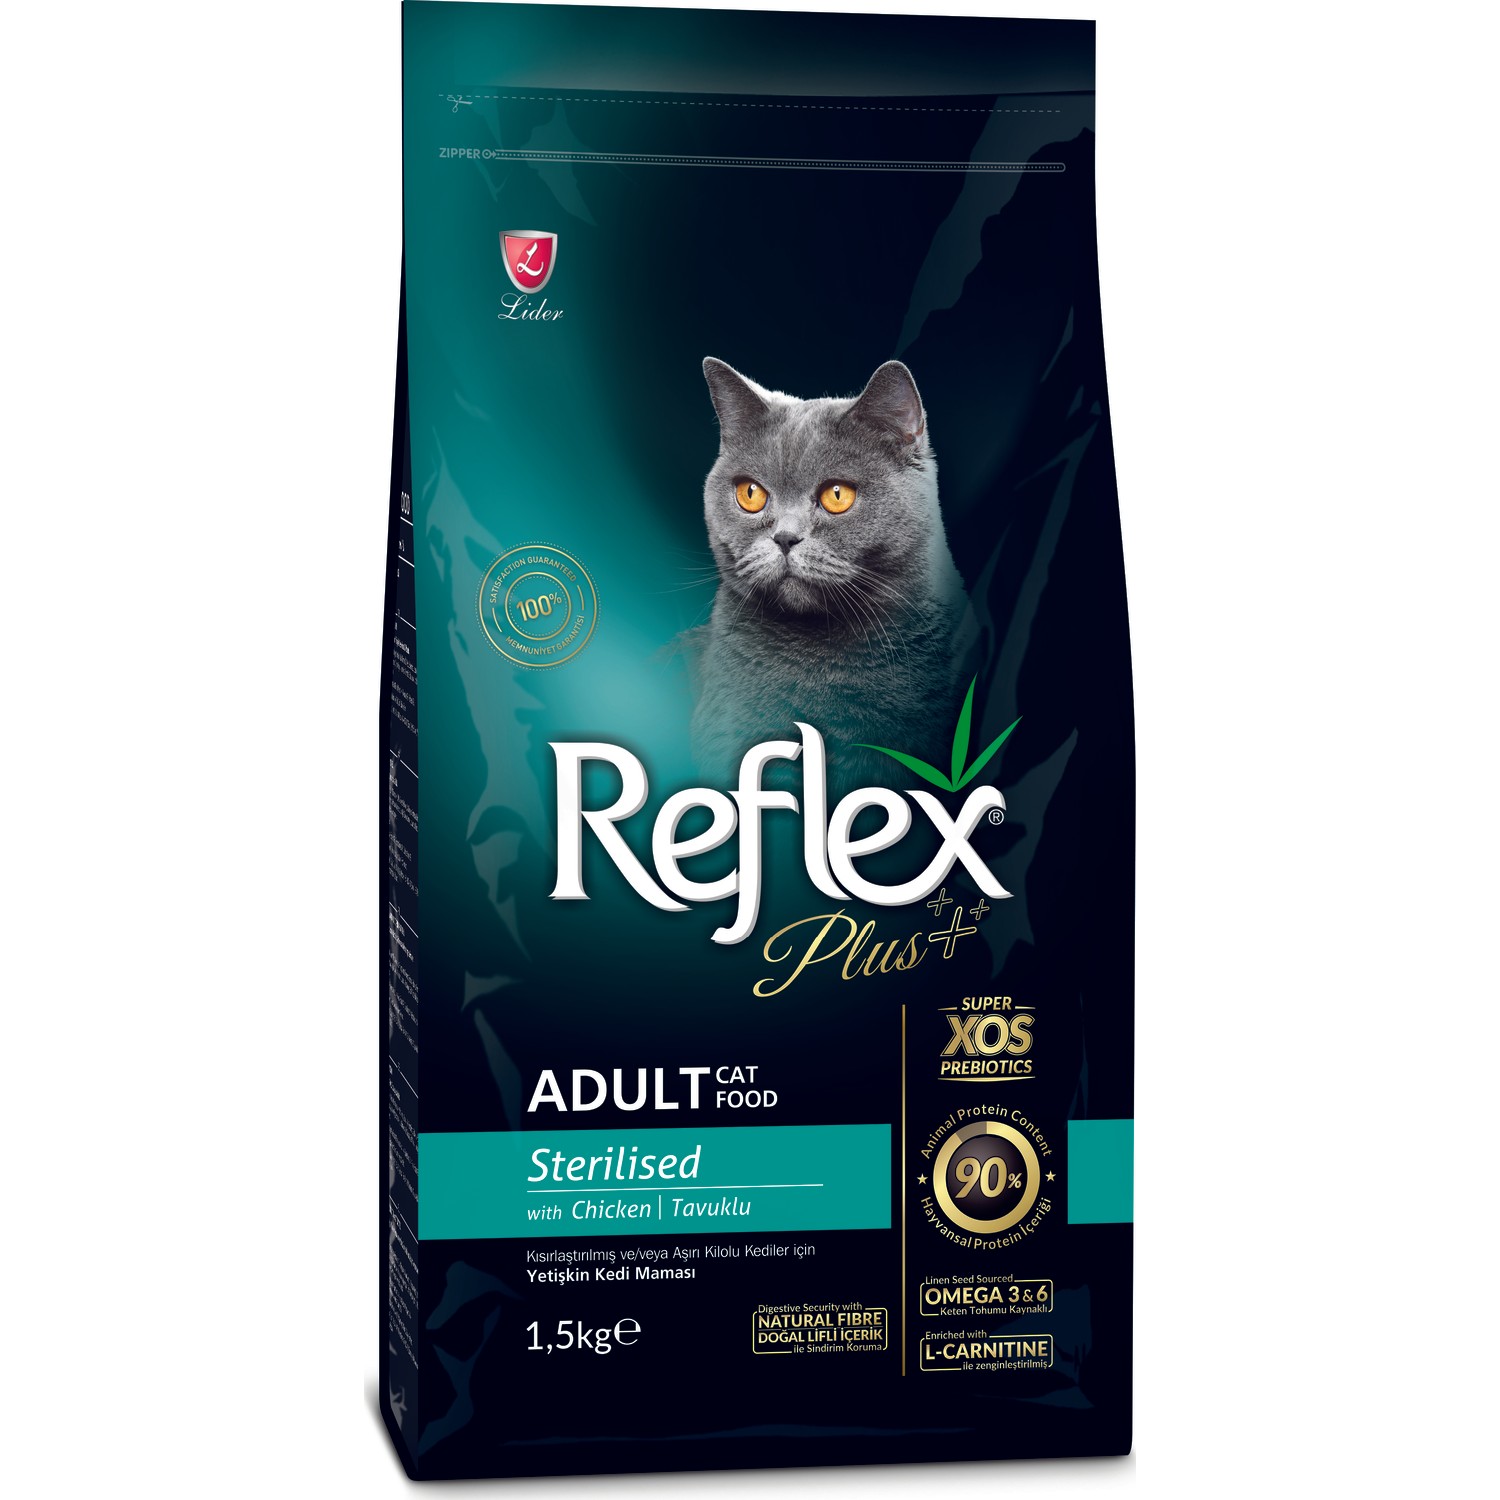 Reflex Plus Tavuklu Kısırlaştırılmış Kedi Maması 1,5 Kg Fiyatı